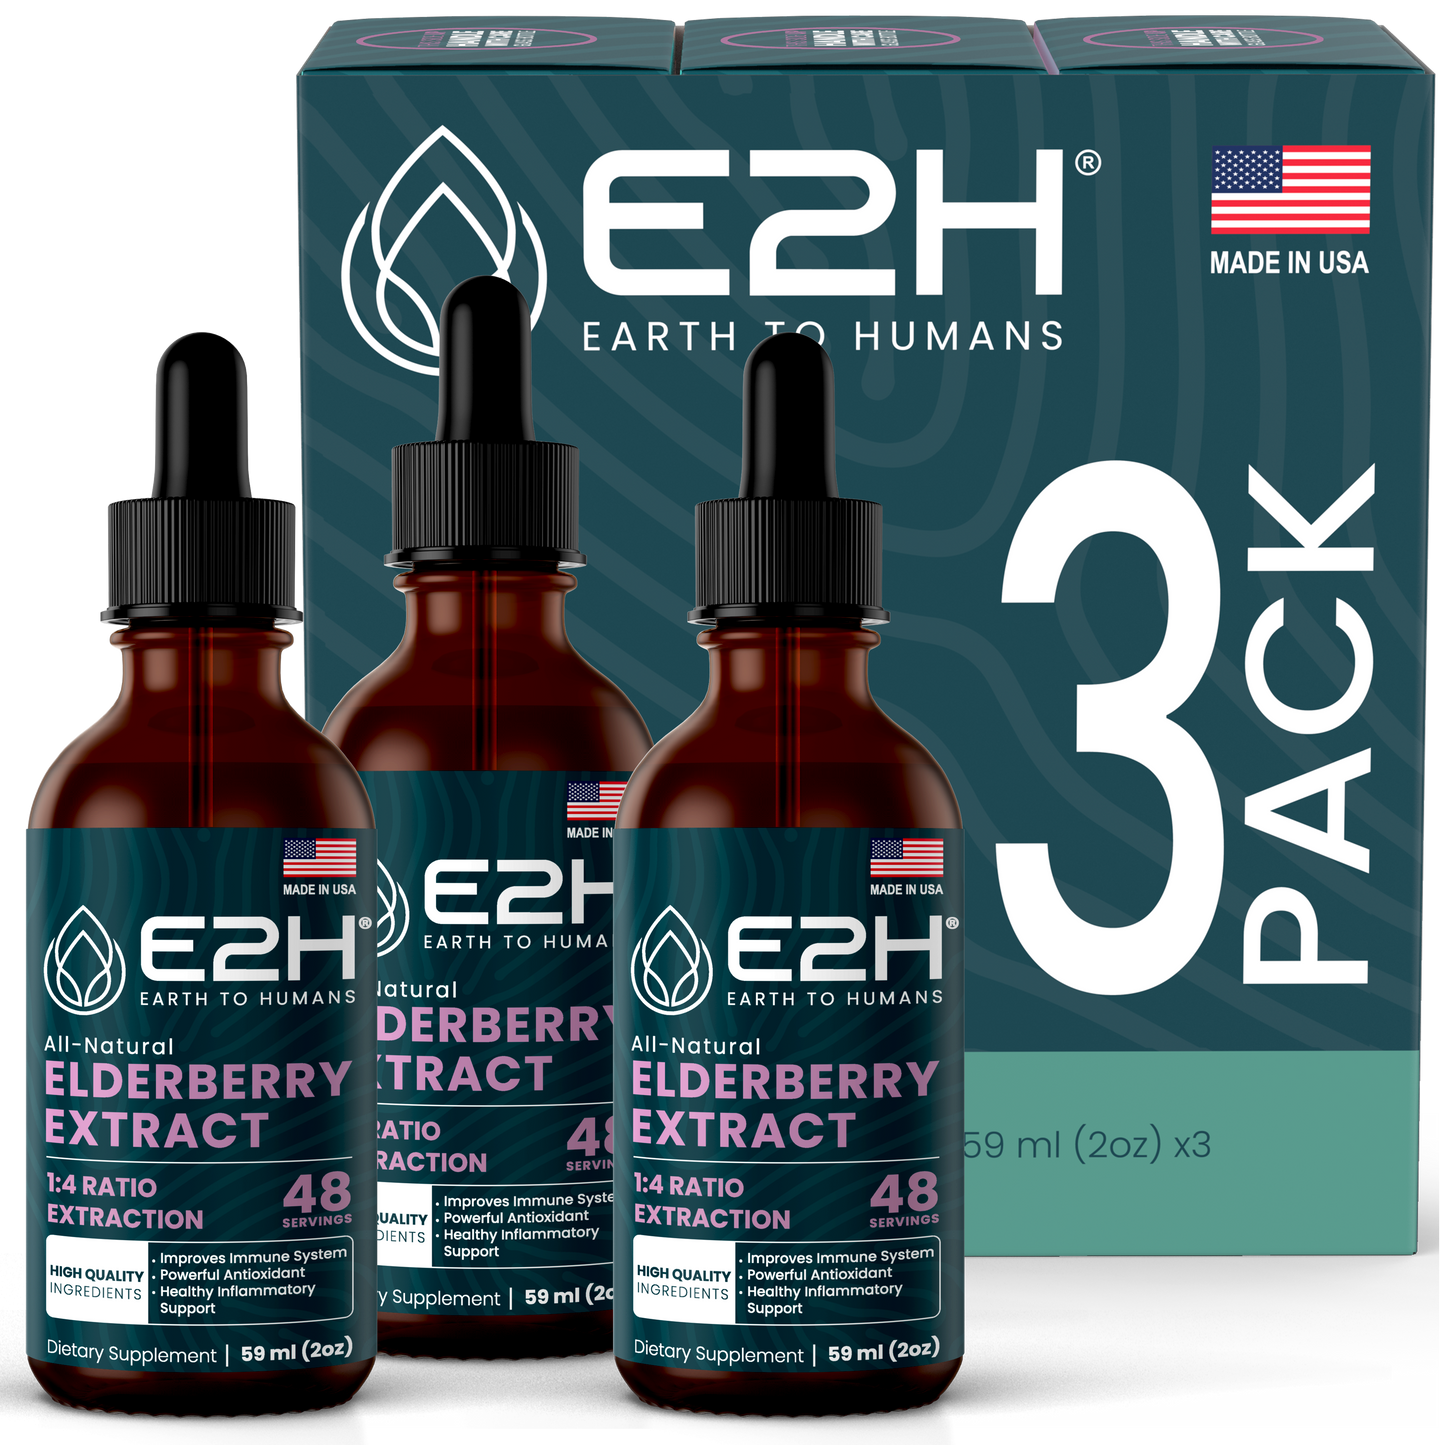 
                  
                    All-Natural ELDERBERRY Liquid Extract - E2H
                  
                